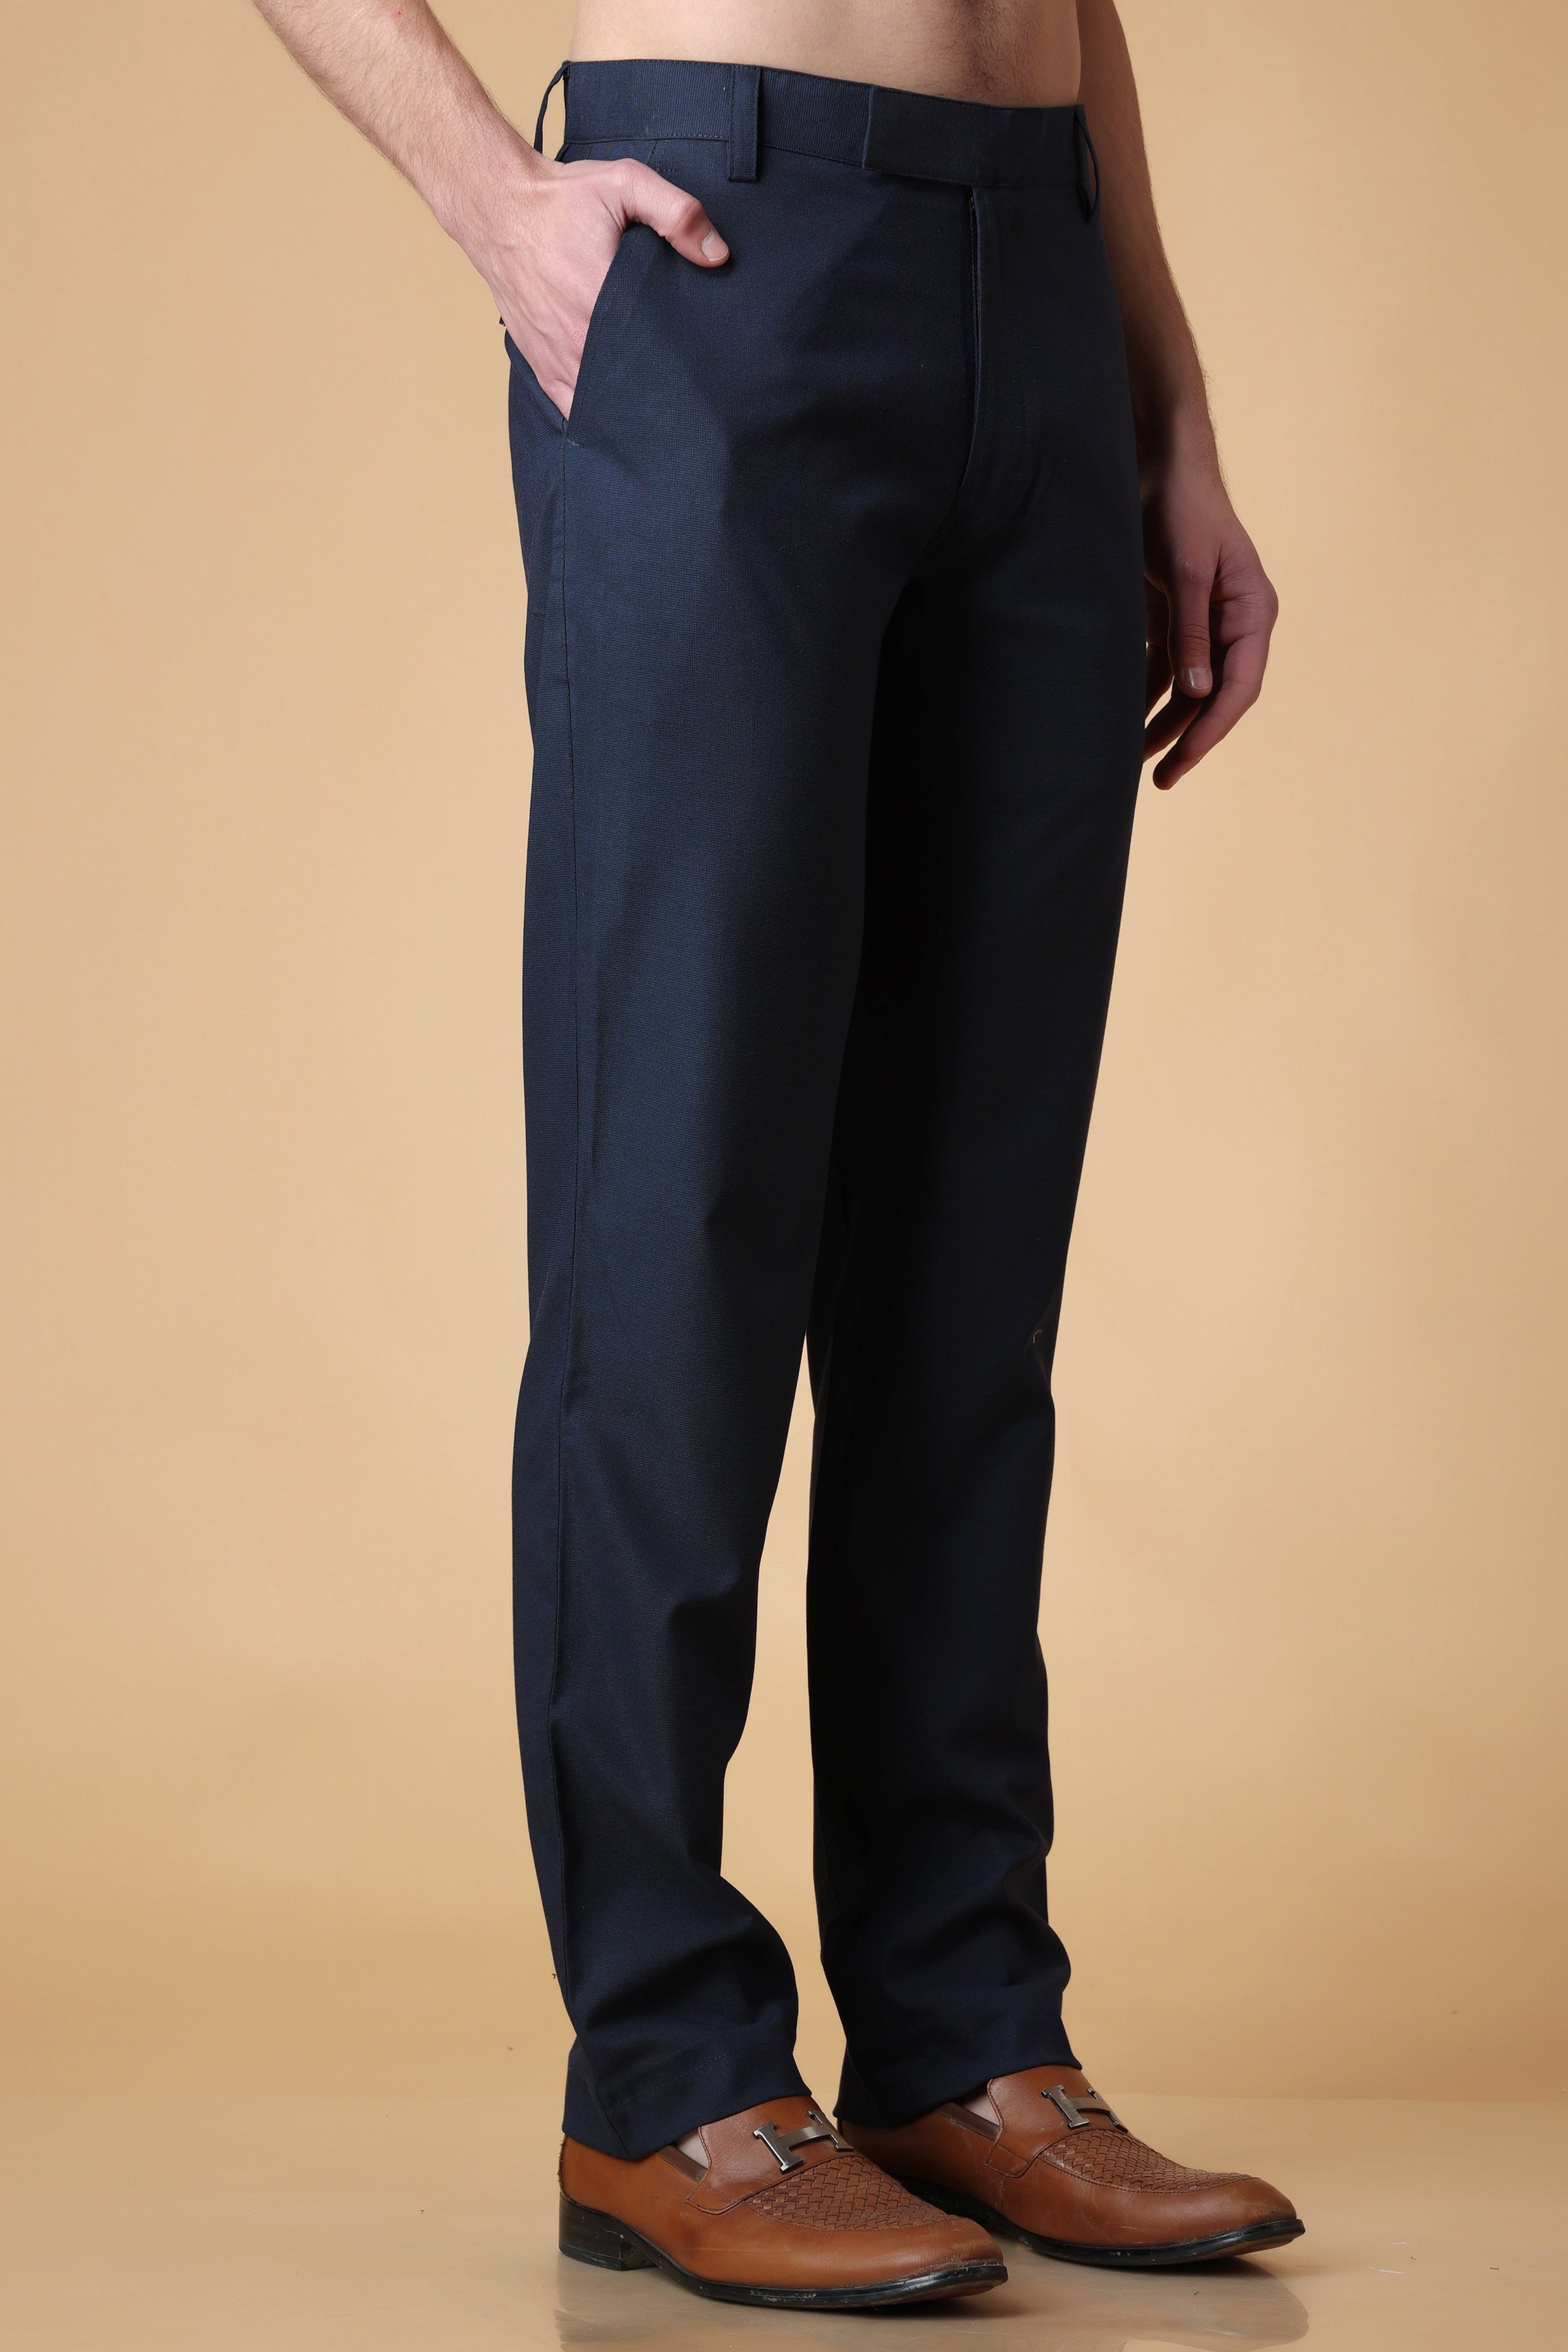 Next Look Slim Fit Men Grey Trousers - Buy Next Look Slim Fit Men Grey  Trousers Online at Best Prices in India | Flipkart.com